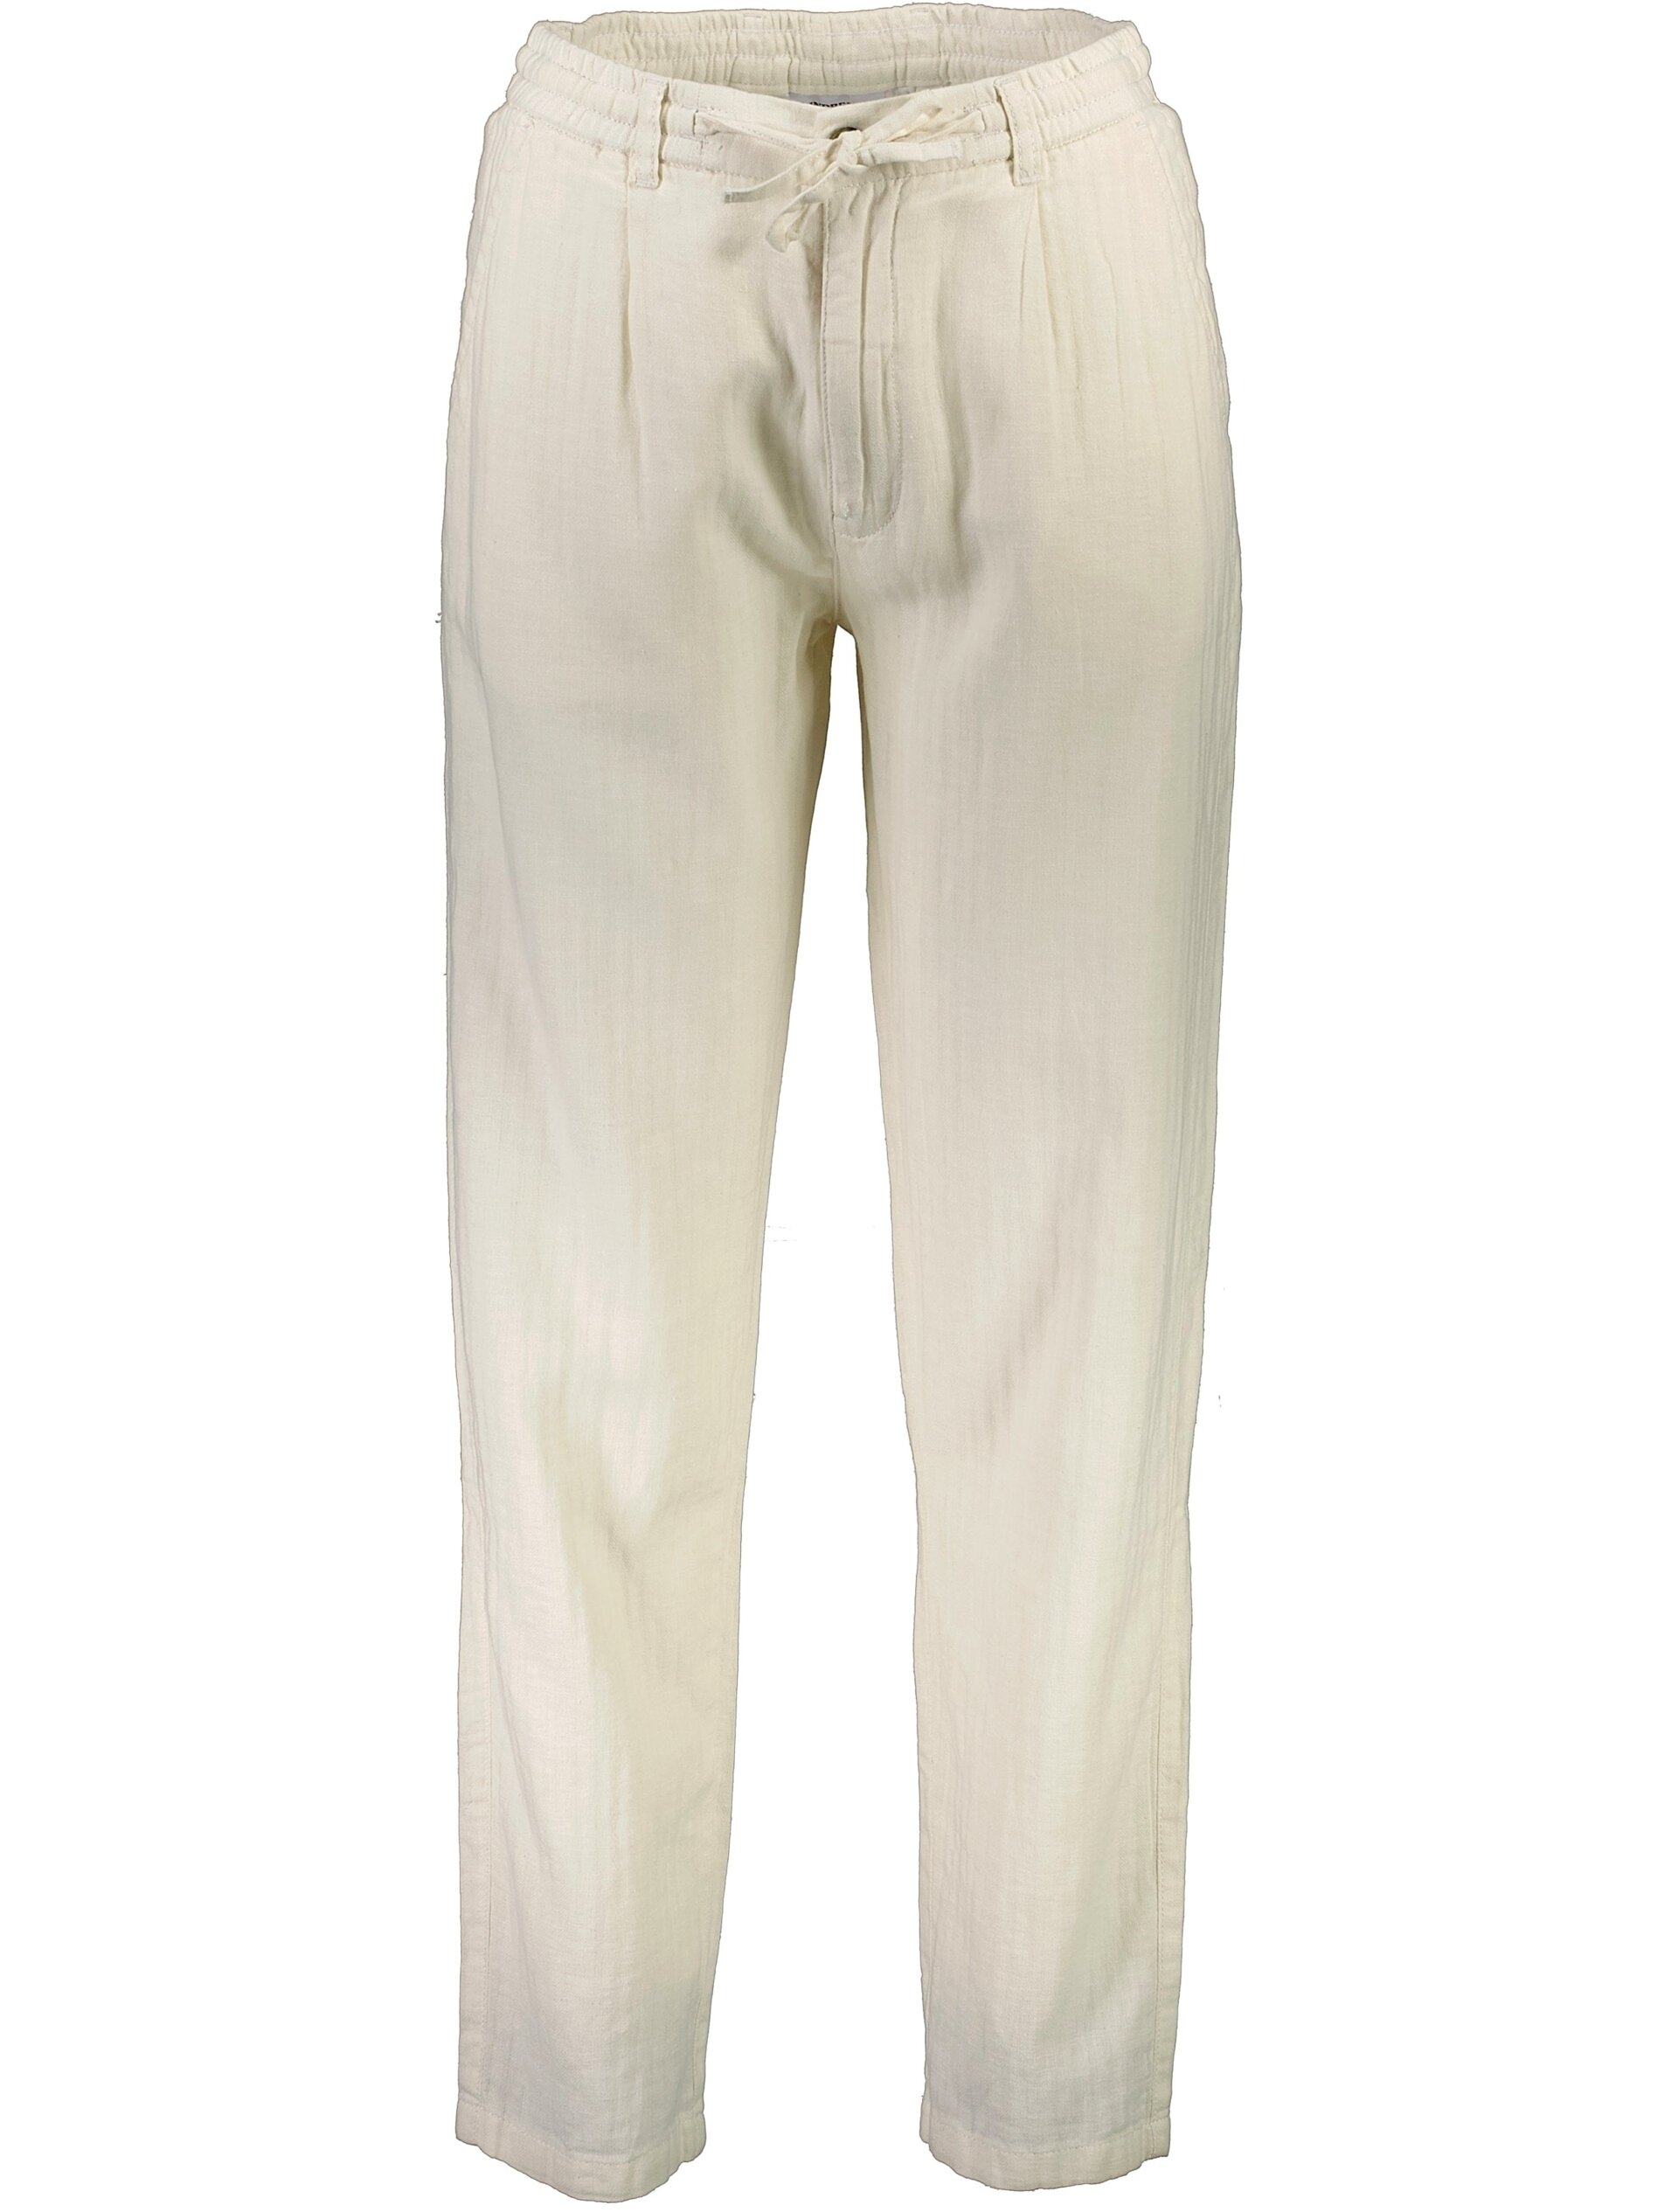 Lindbergh Linen pants white / white